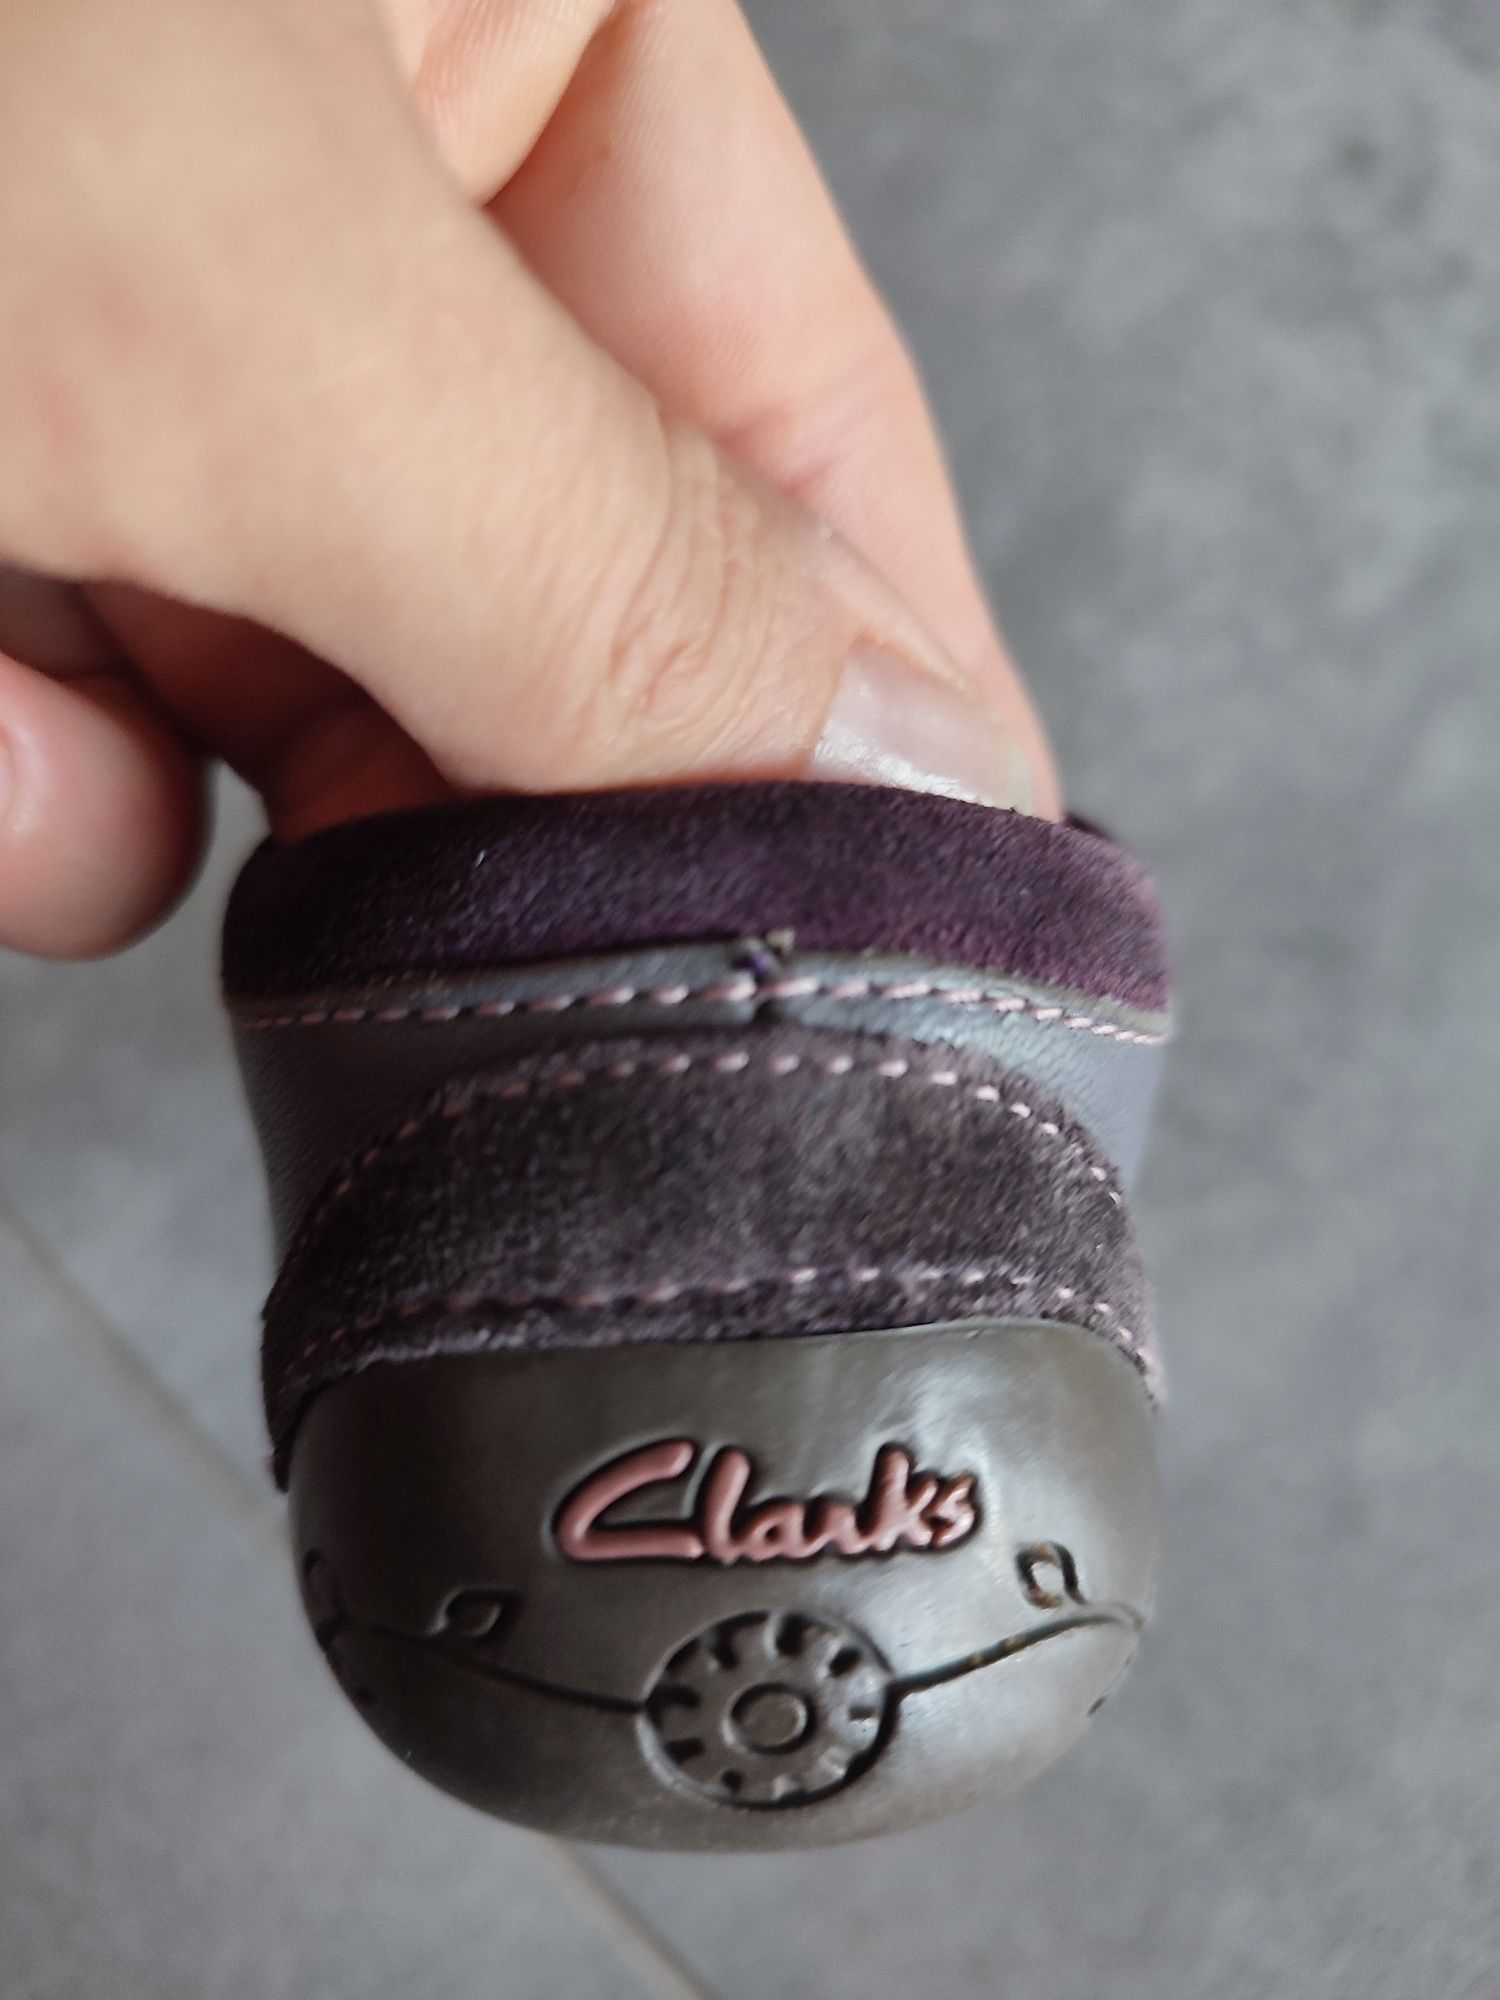 Buty Clarks 4.5 20.5 skóra miękkie pierwsze buciki